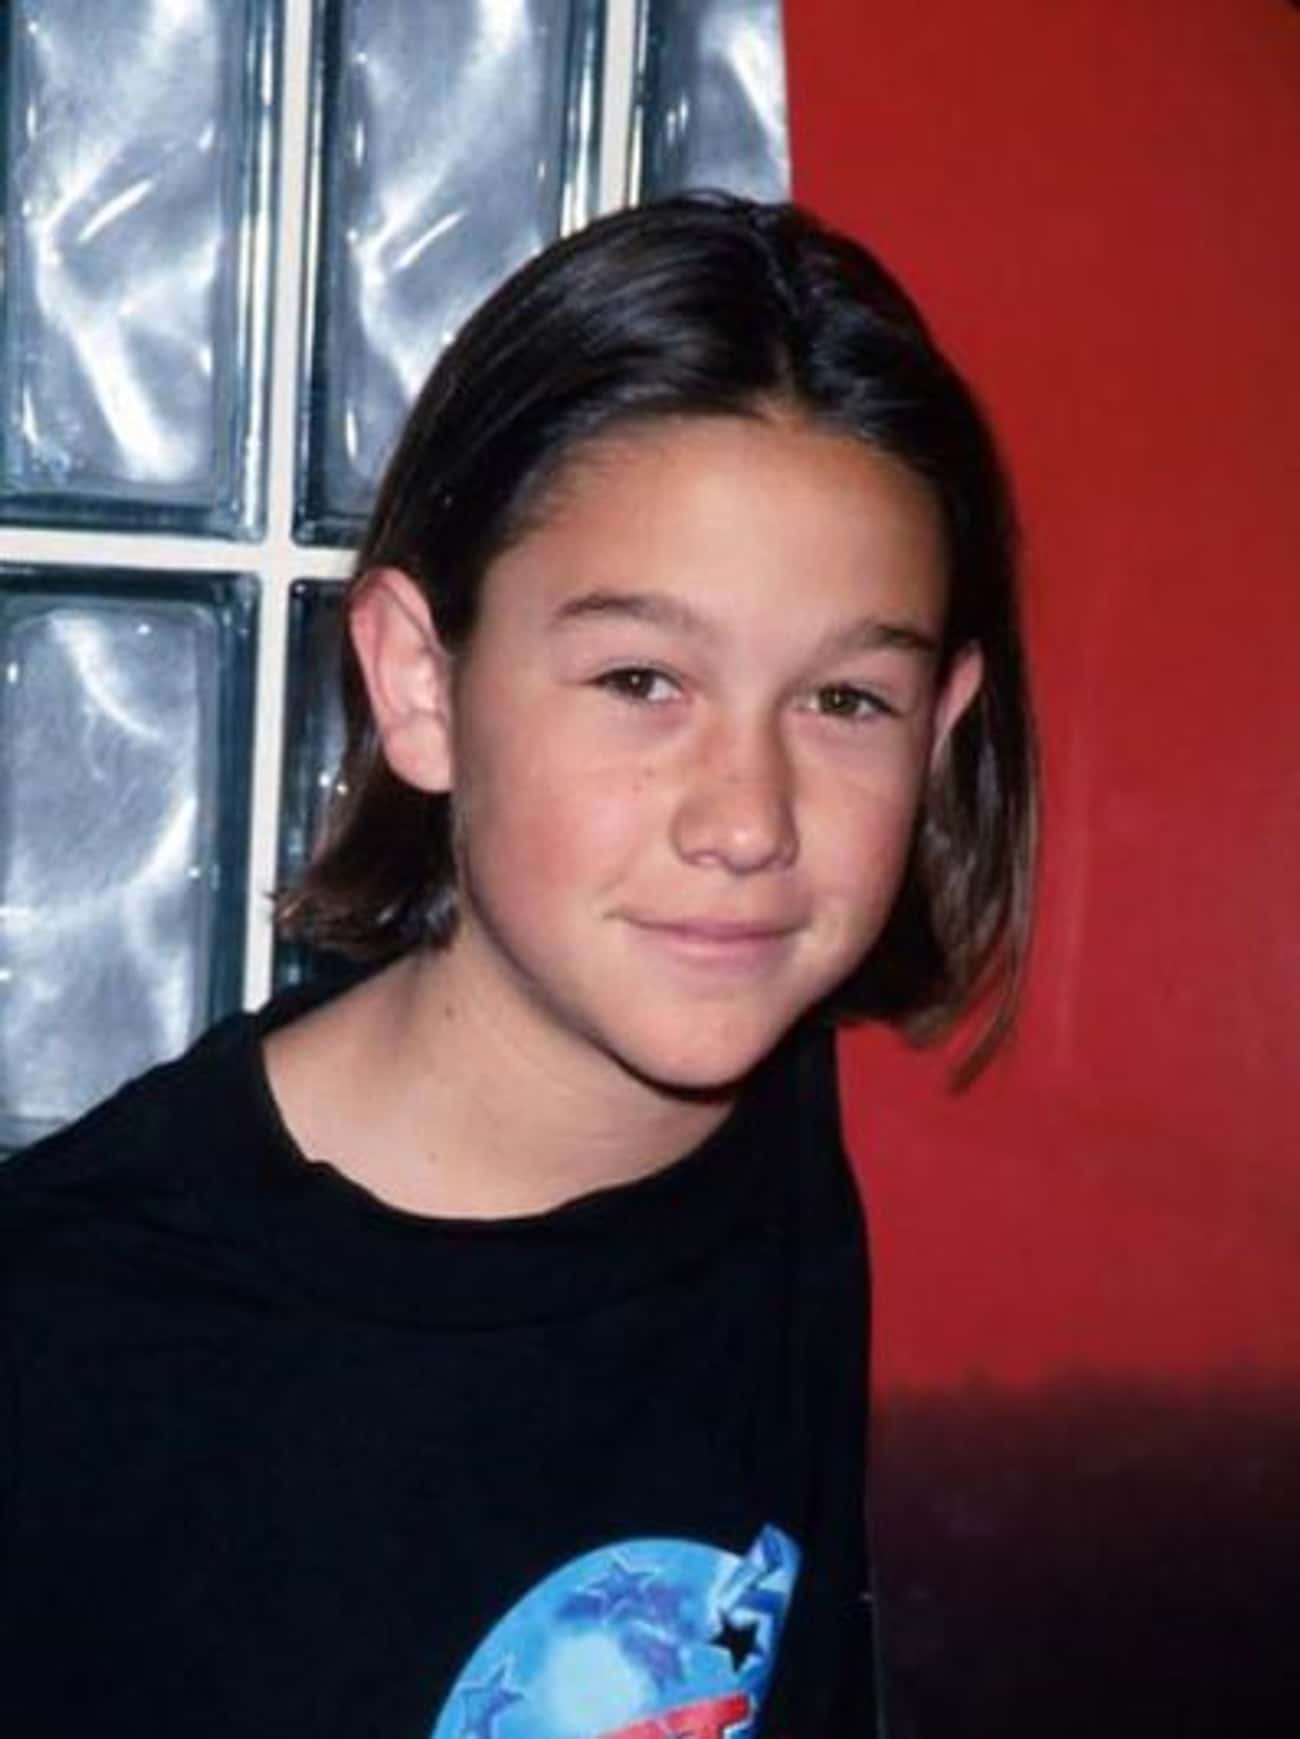 Young Joseph Gordon-Levitt in Black T-Shirt Semi-Closeup